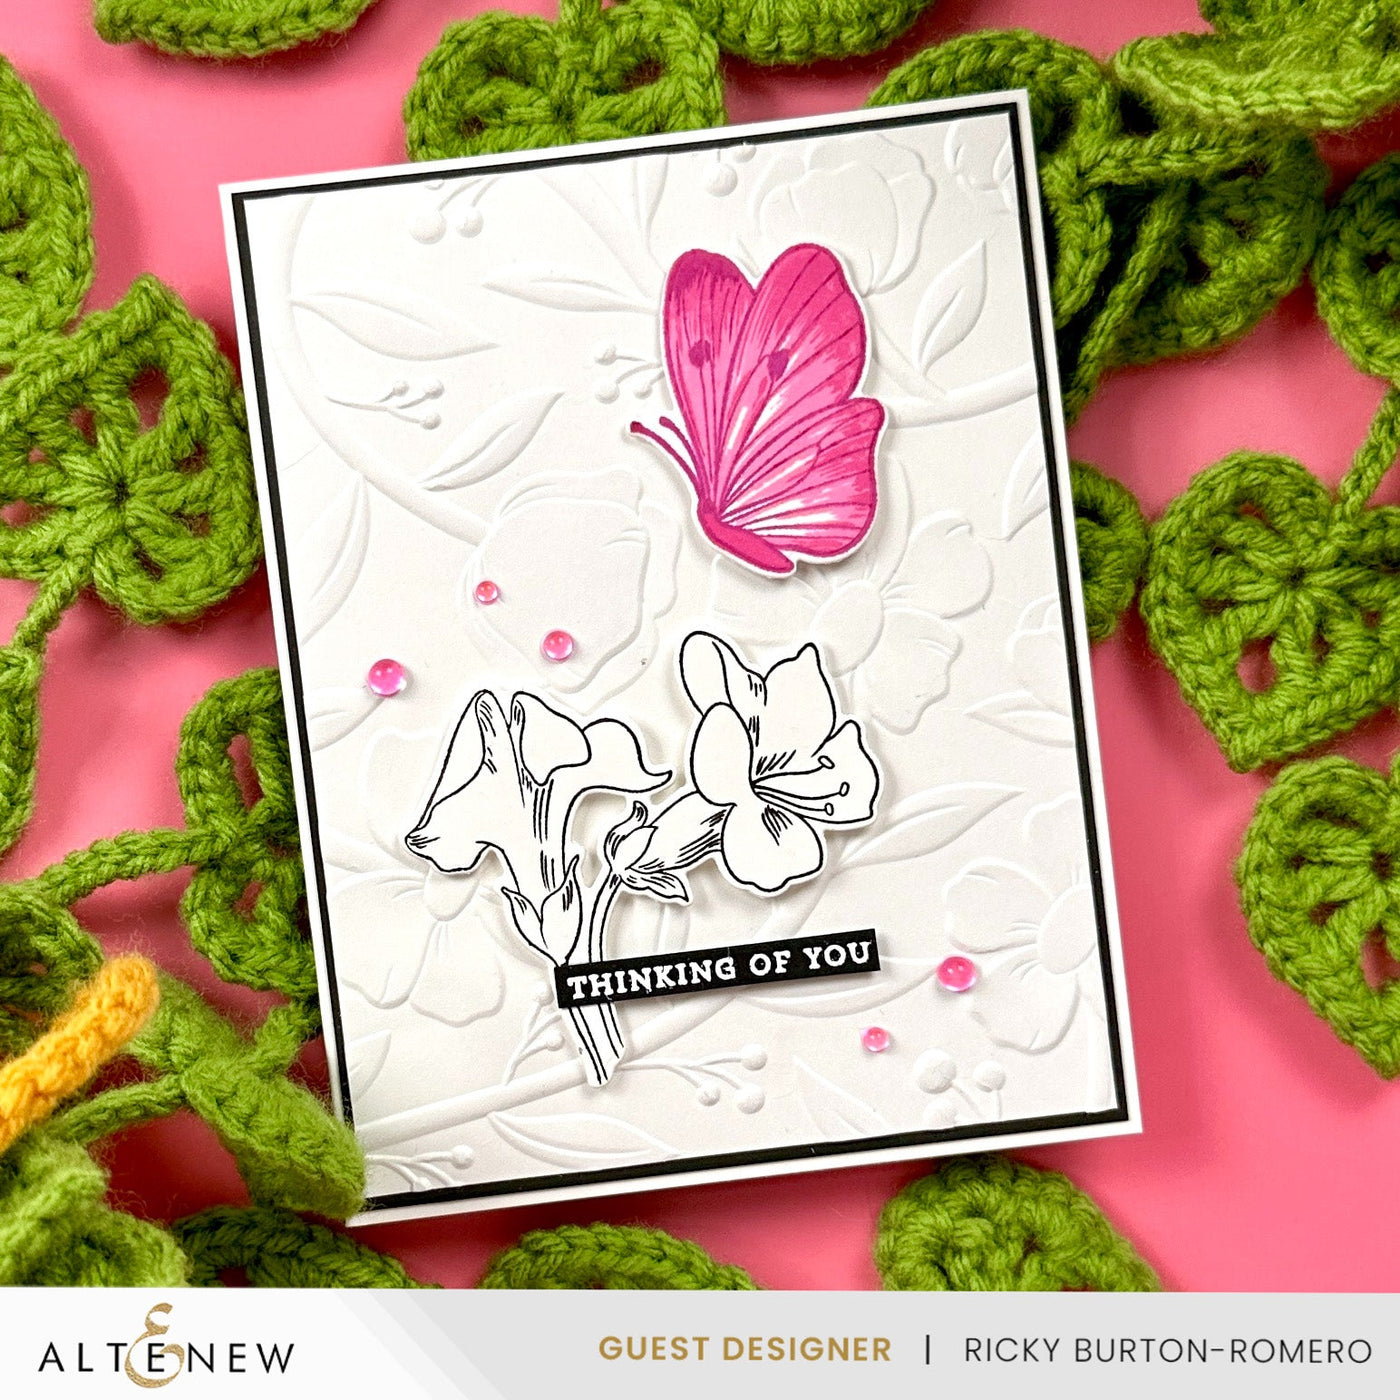 Mini Delight Mini Delight: Delicate Butterfly Stamp & Die Set